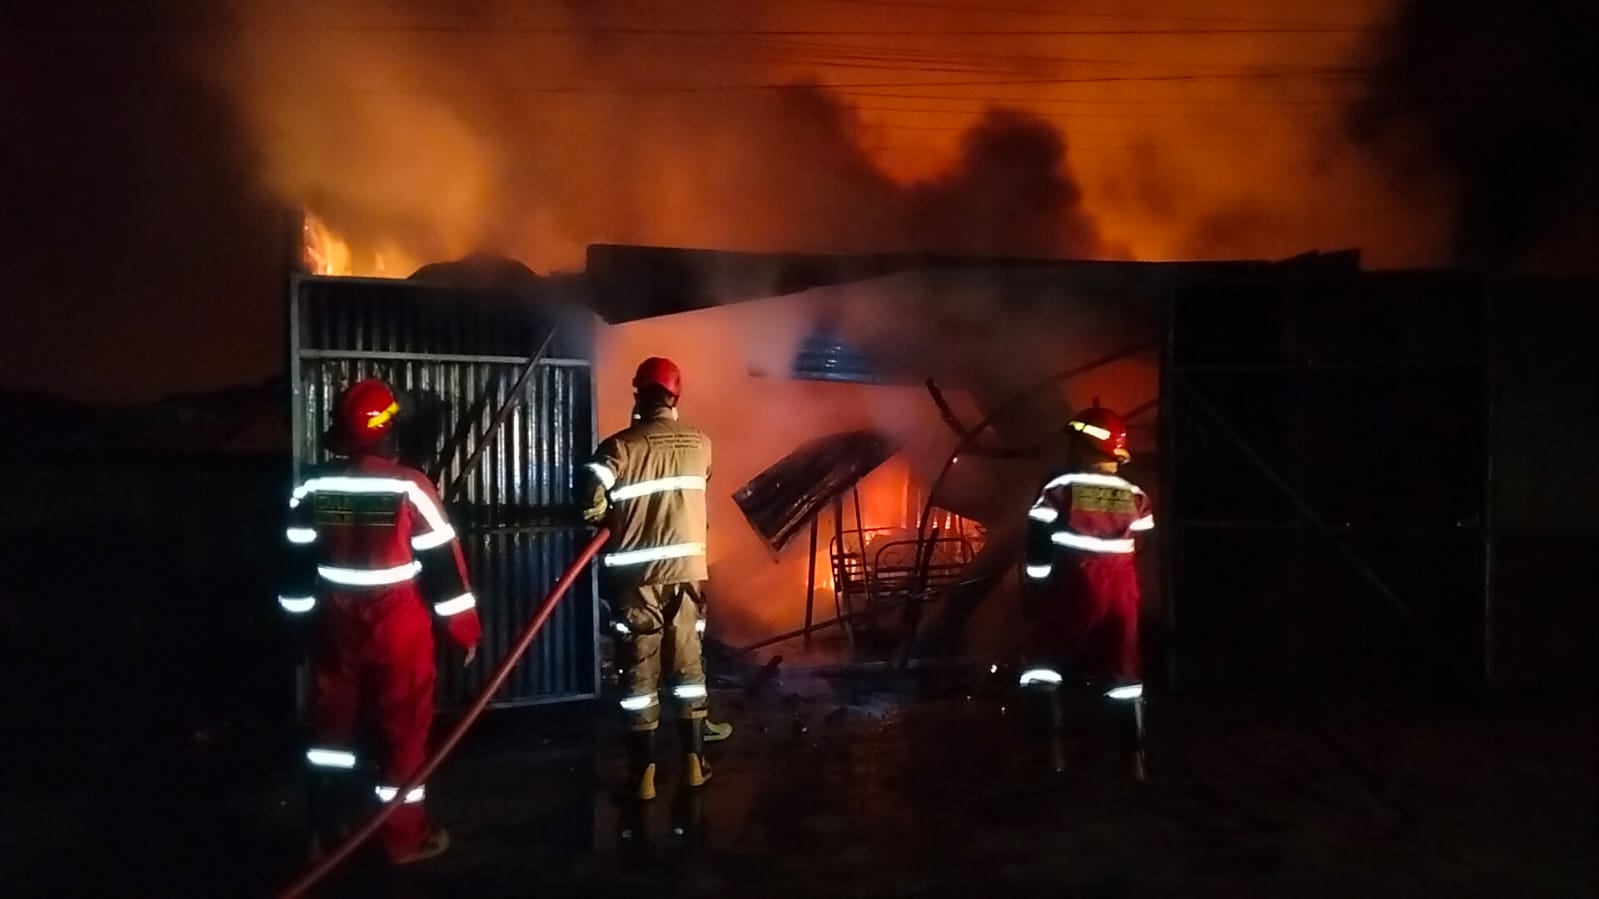 BREAKING NEWS, Gudang Pengepul Barang Bekas di Sawah Lebar Ludes Terbakar